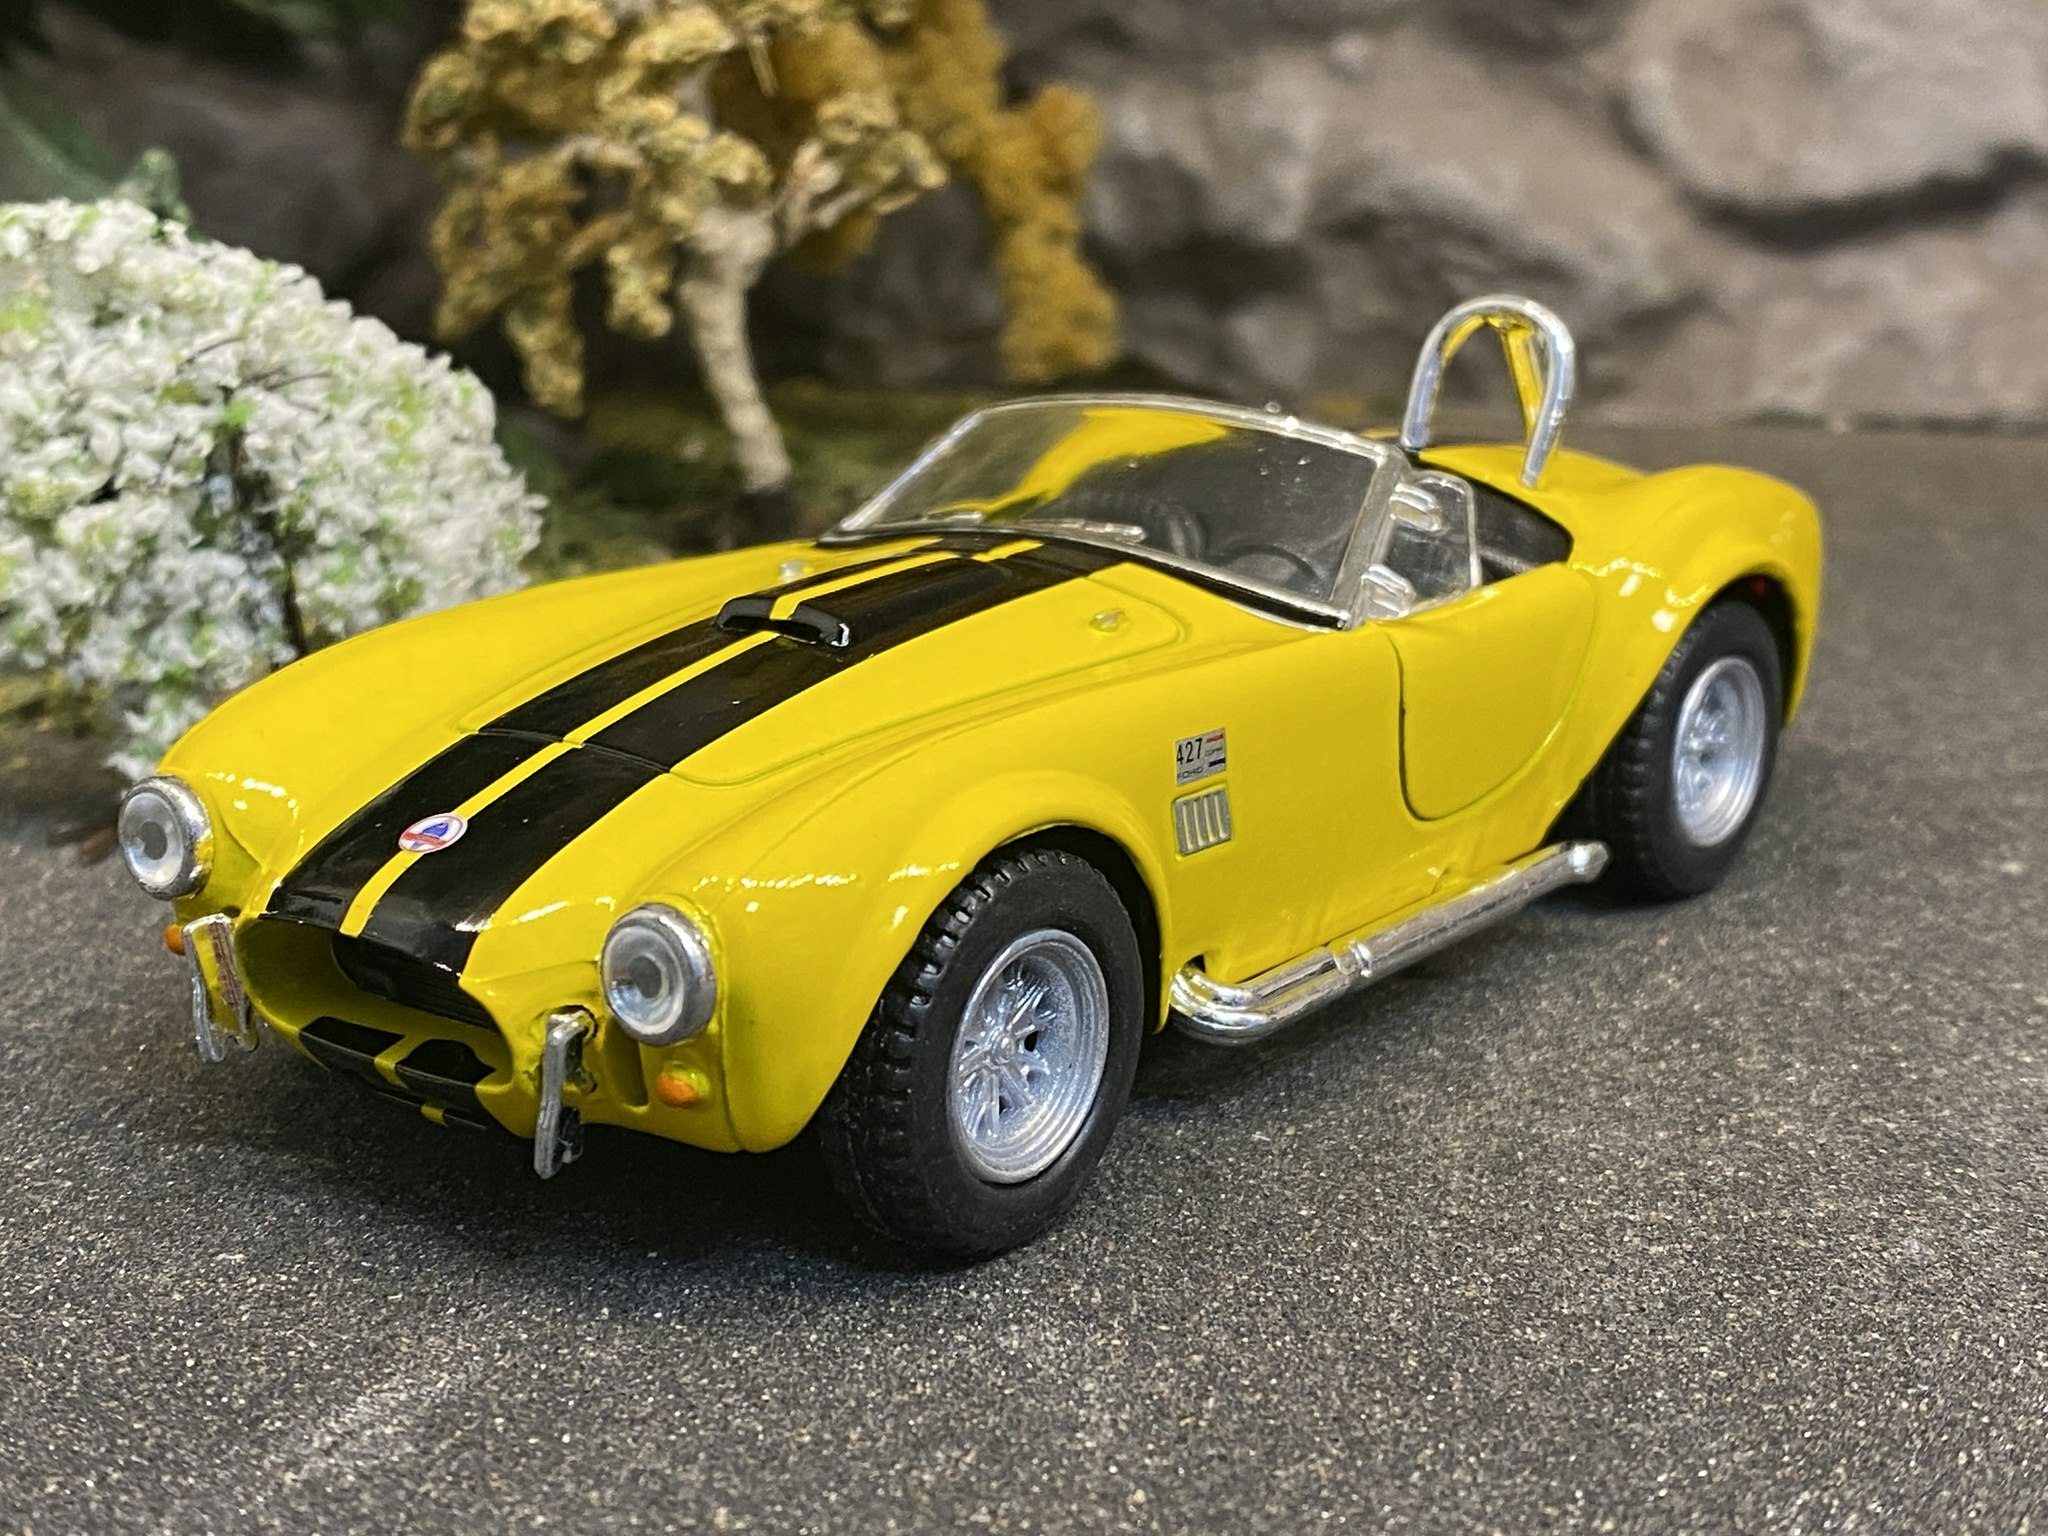 Skala 1/32 Shelby Cobra 427 S/C 1965' Yellow w stripes fr Kinsmart